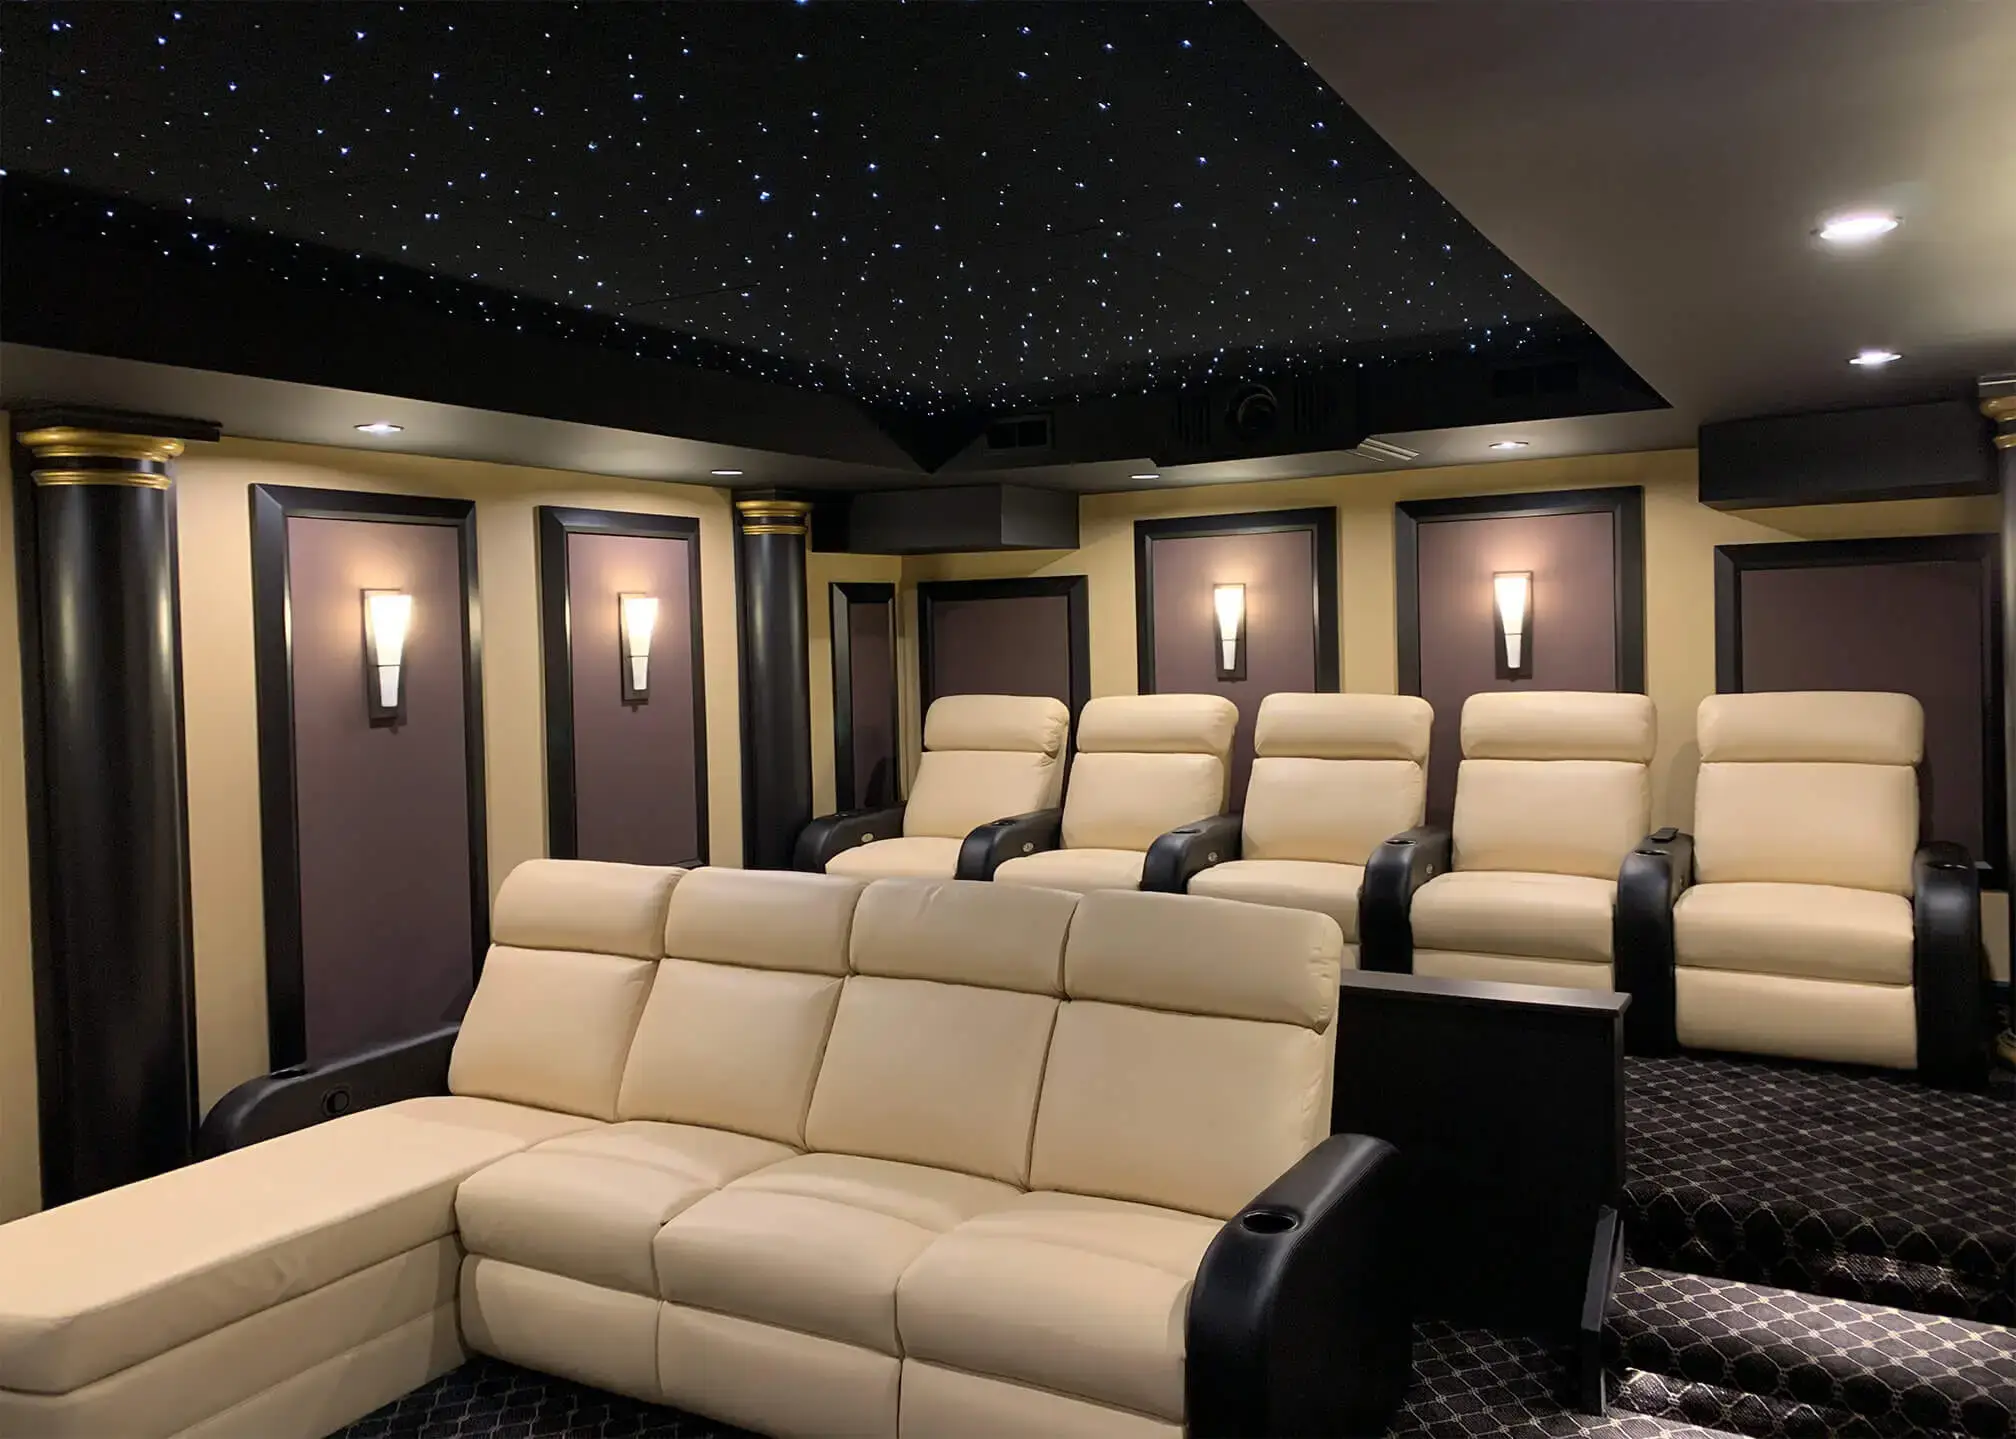 Home Cinema Seating